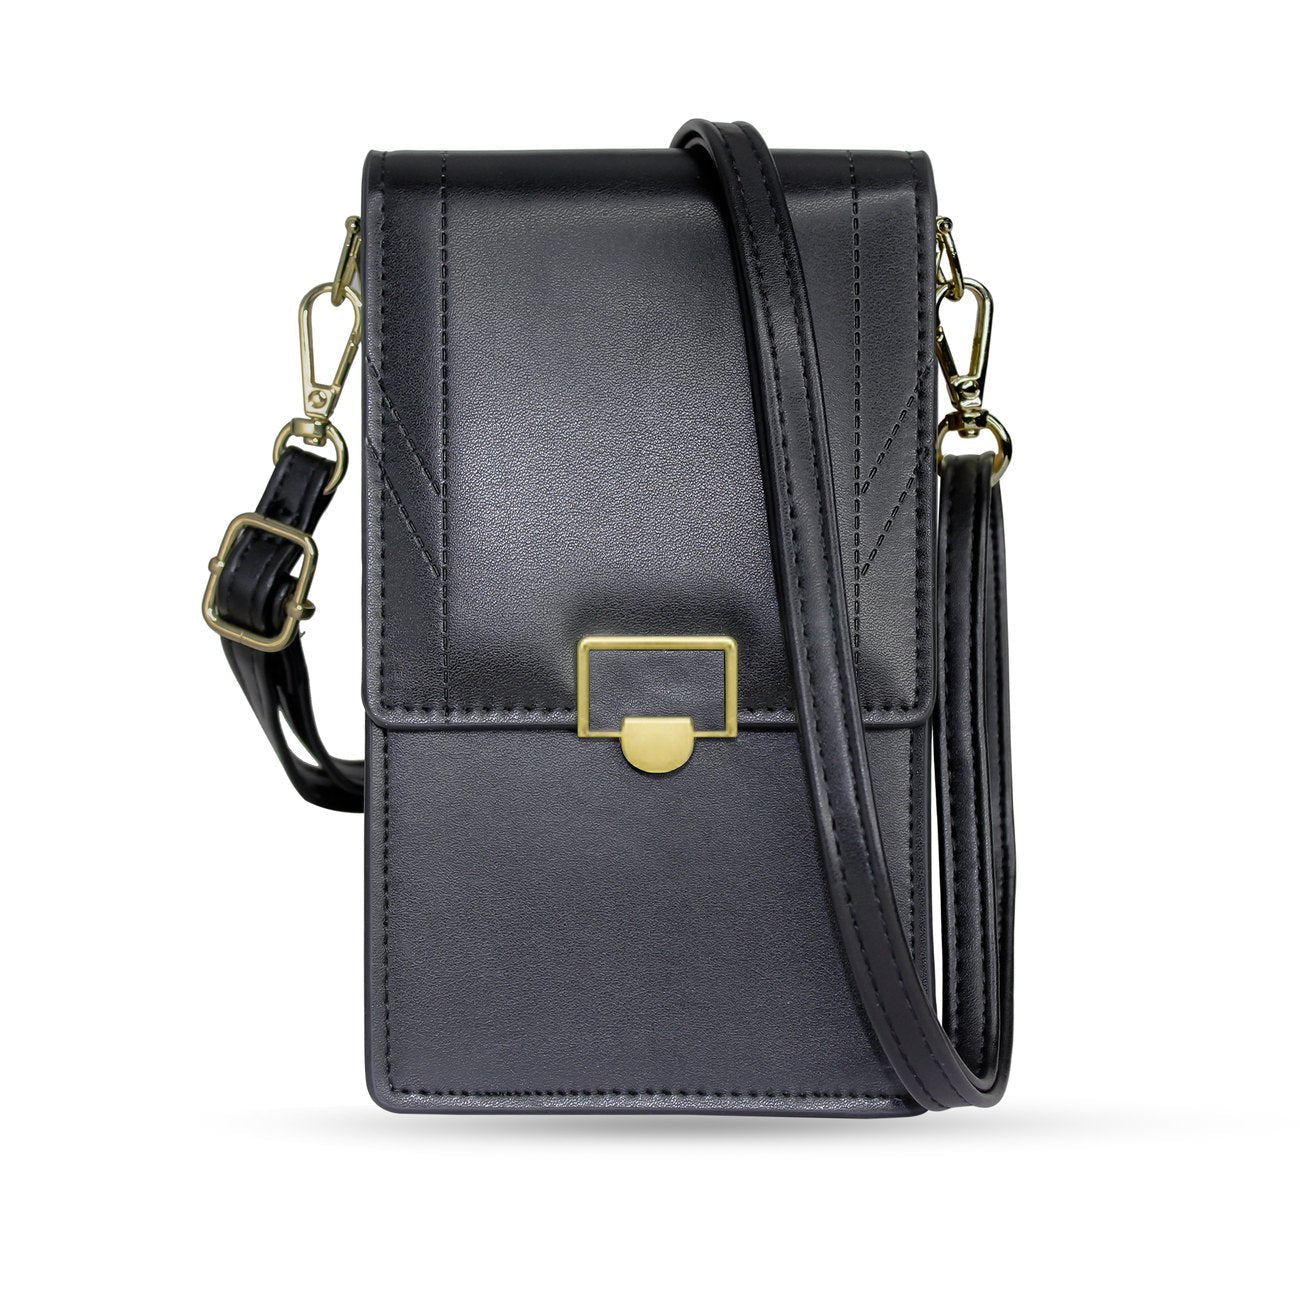 Fancy Bag Case Handmade Pouch High Quality Bag Smartphone Purse with Shoulder Strap Wallet Black (Model 2)